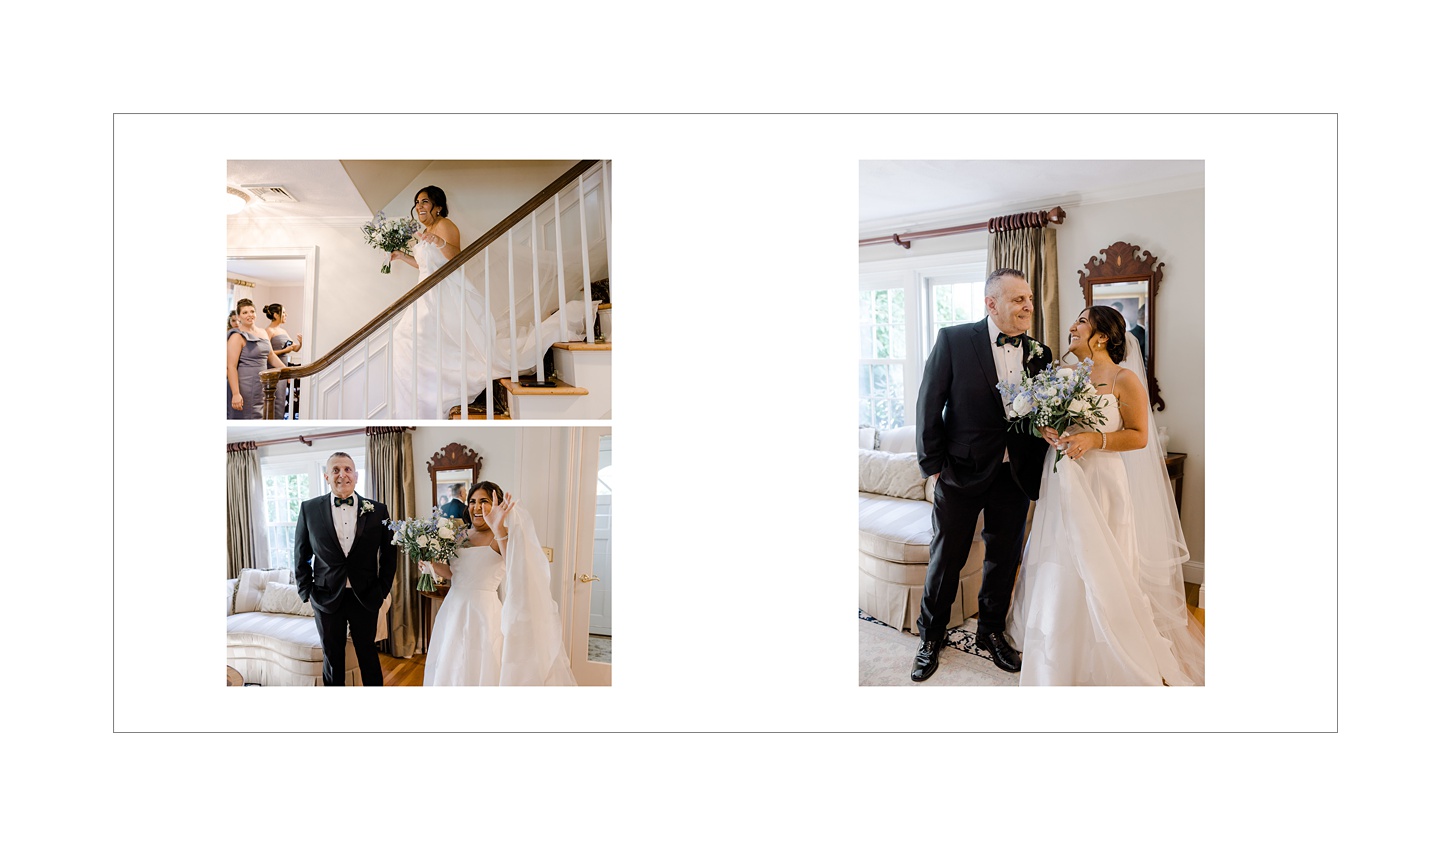 Graduate Providence wedding storybook album created by Rhode Island wedding photographer Sara Zarrella Photography